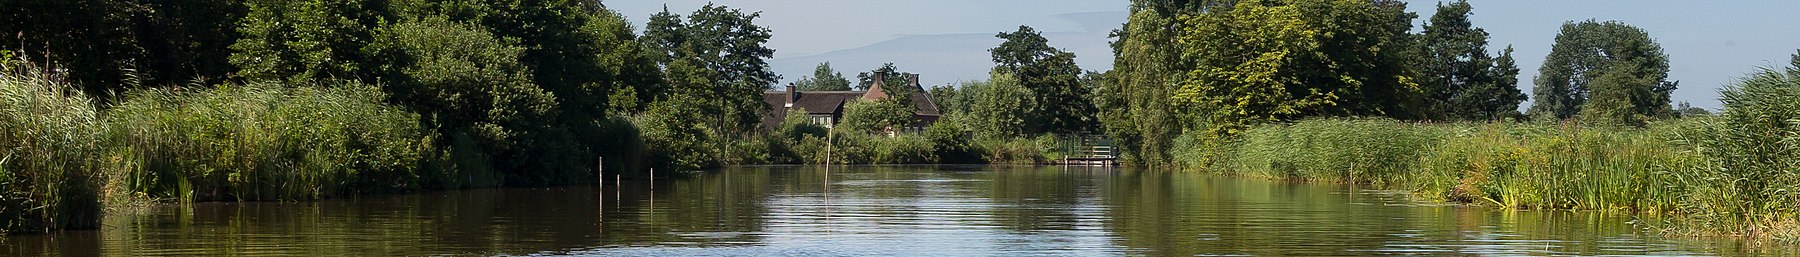 Woerdense Verlaat, Meije jõgi Boswegi foto lähedal12.07.2017 11.01 pagebanner.jpg